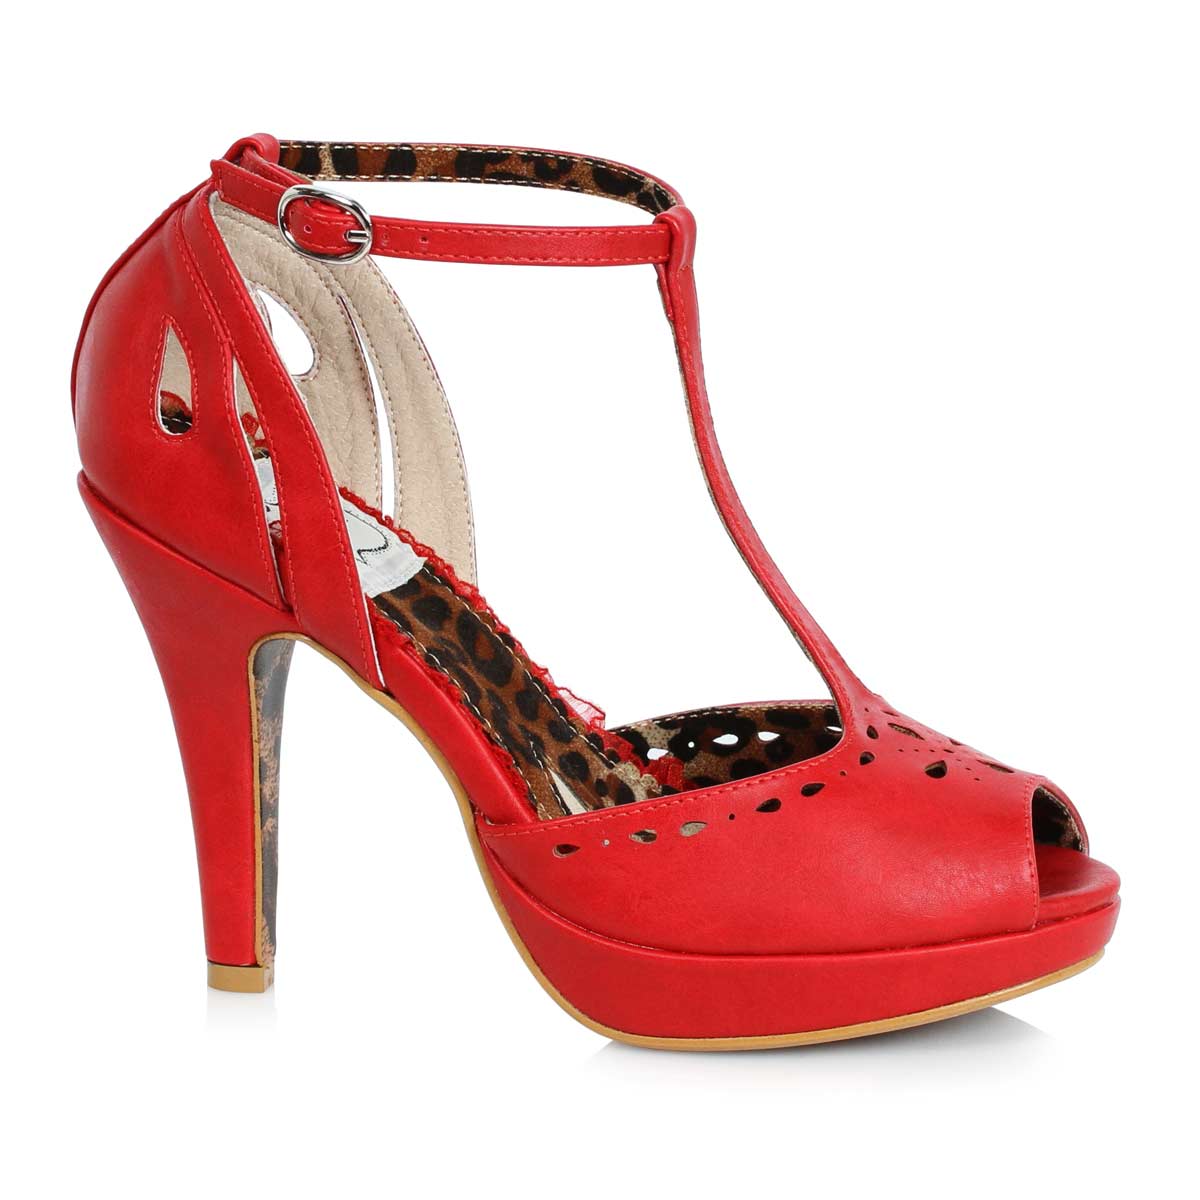 Ellie Shoes BP412-WILLIE Red in Sexy Heels & Platforms - $50.15